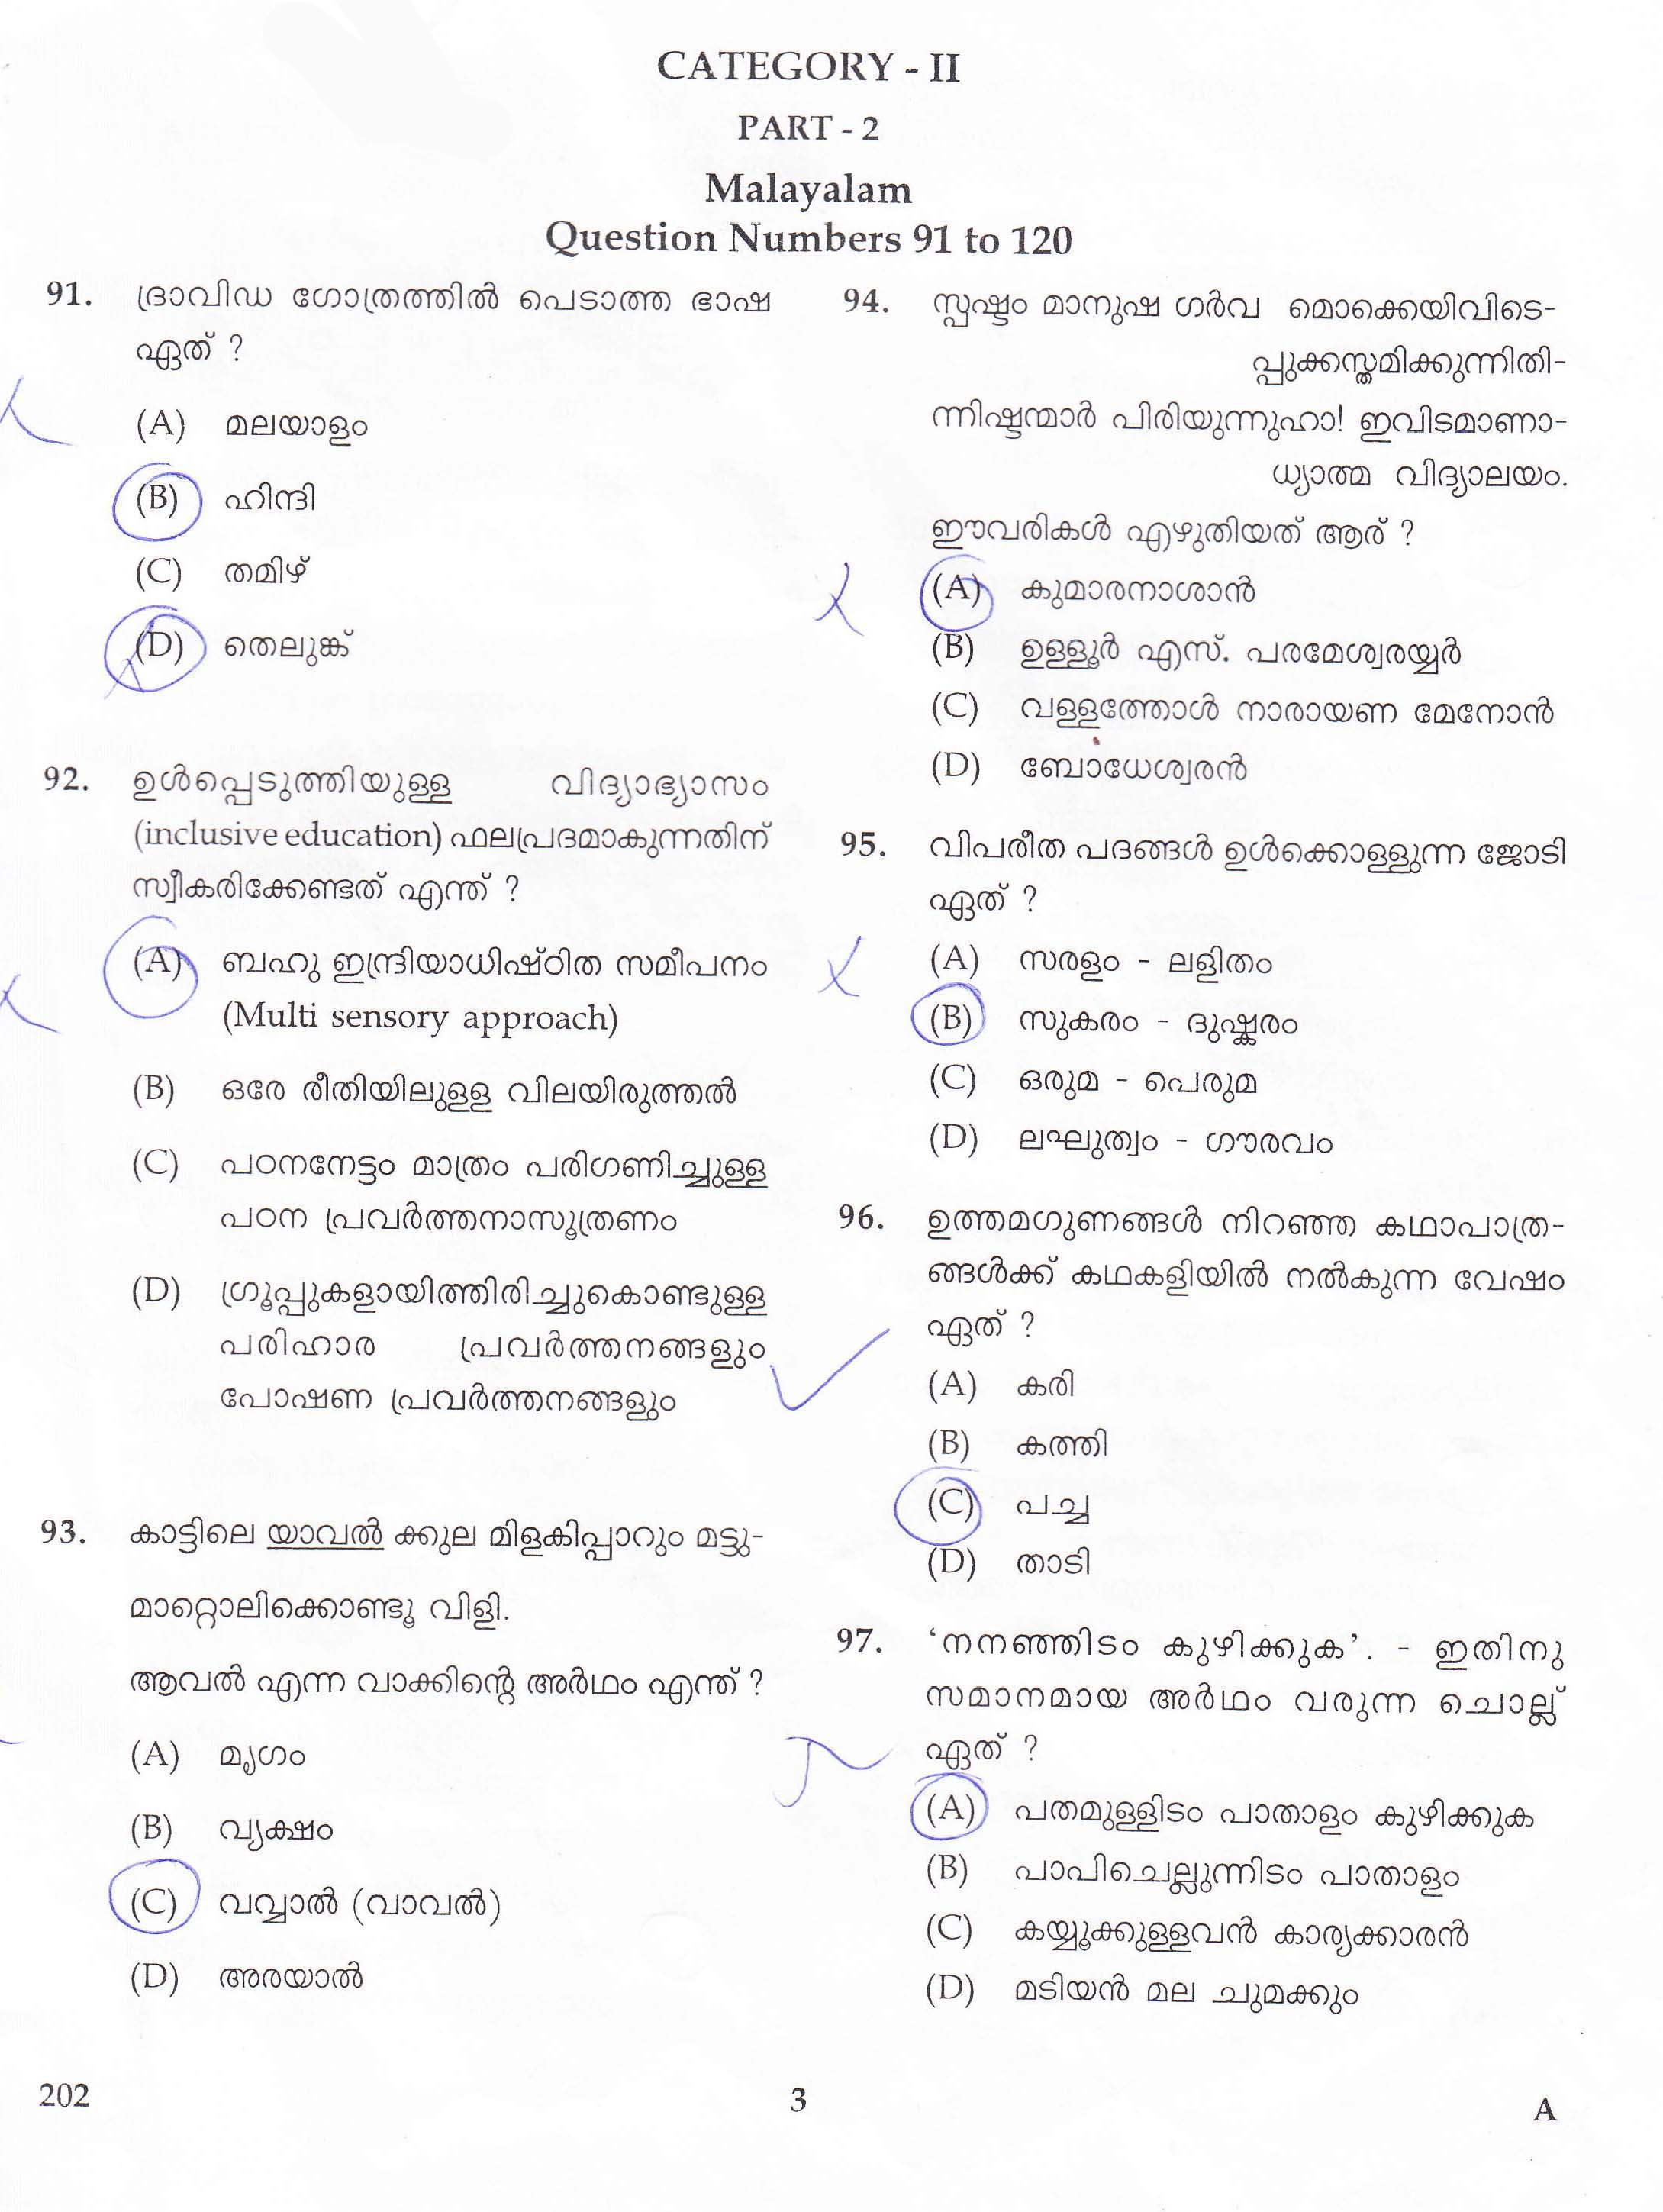 KTET Category II Part 2 Malayalam November 2016 1